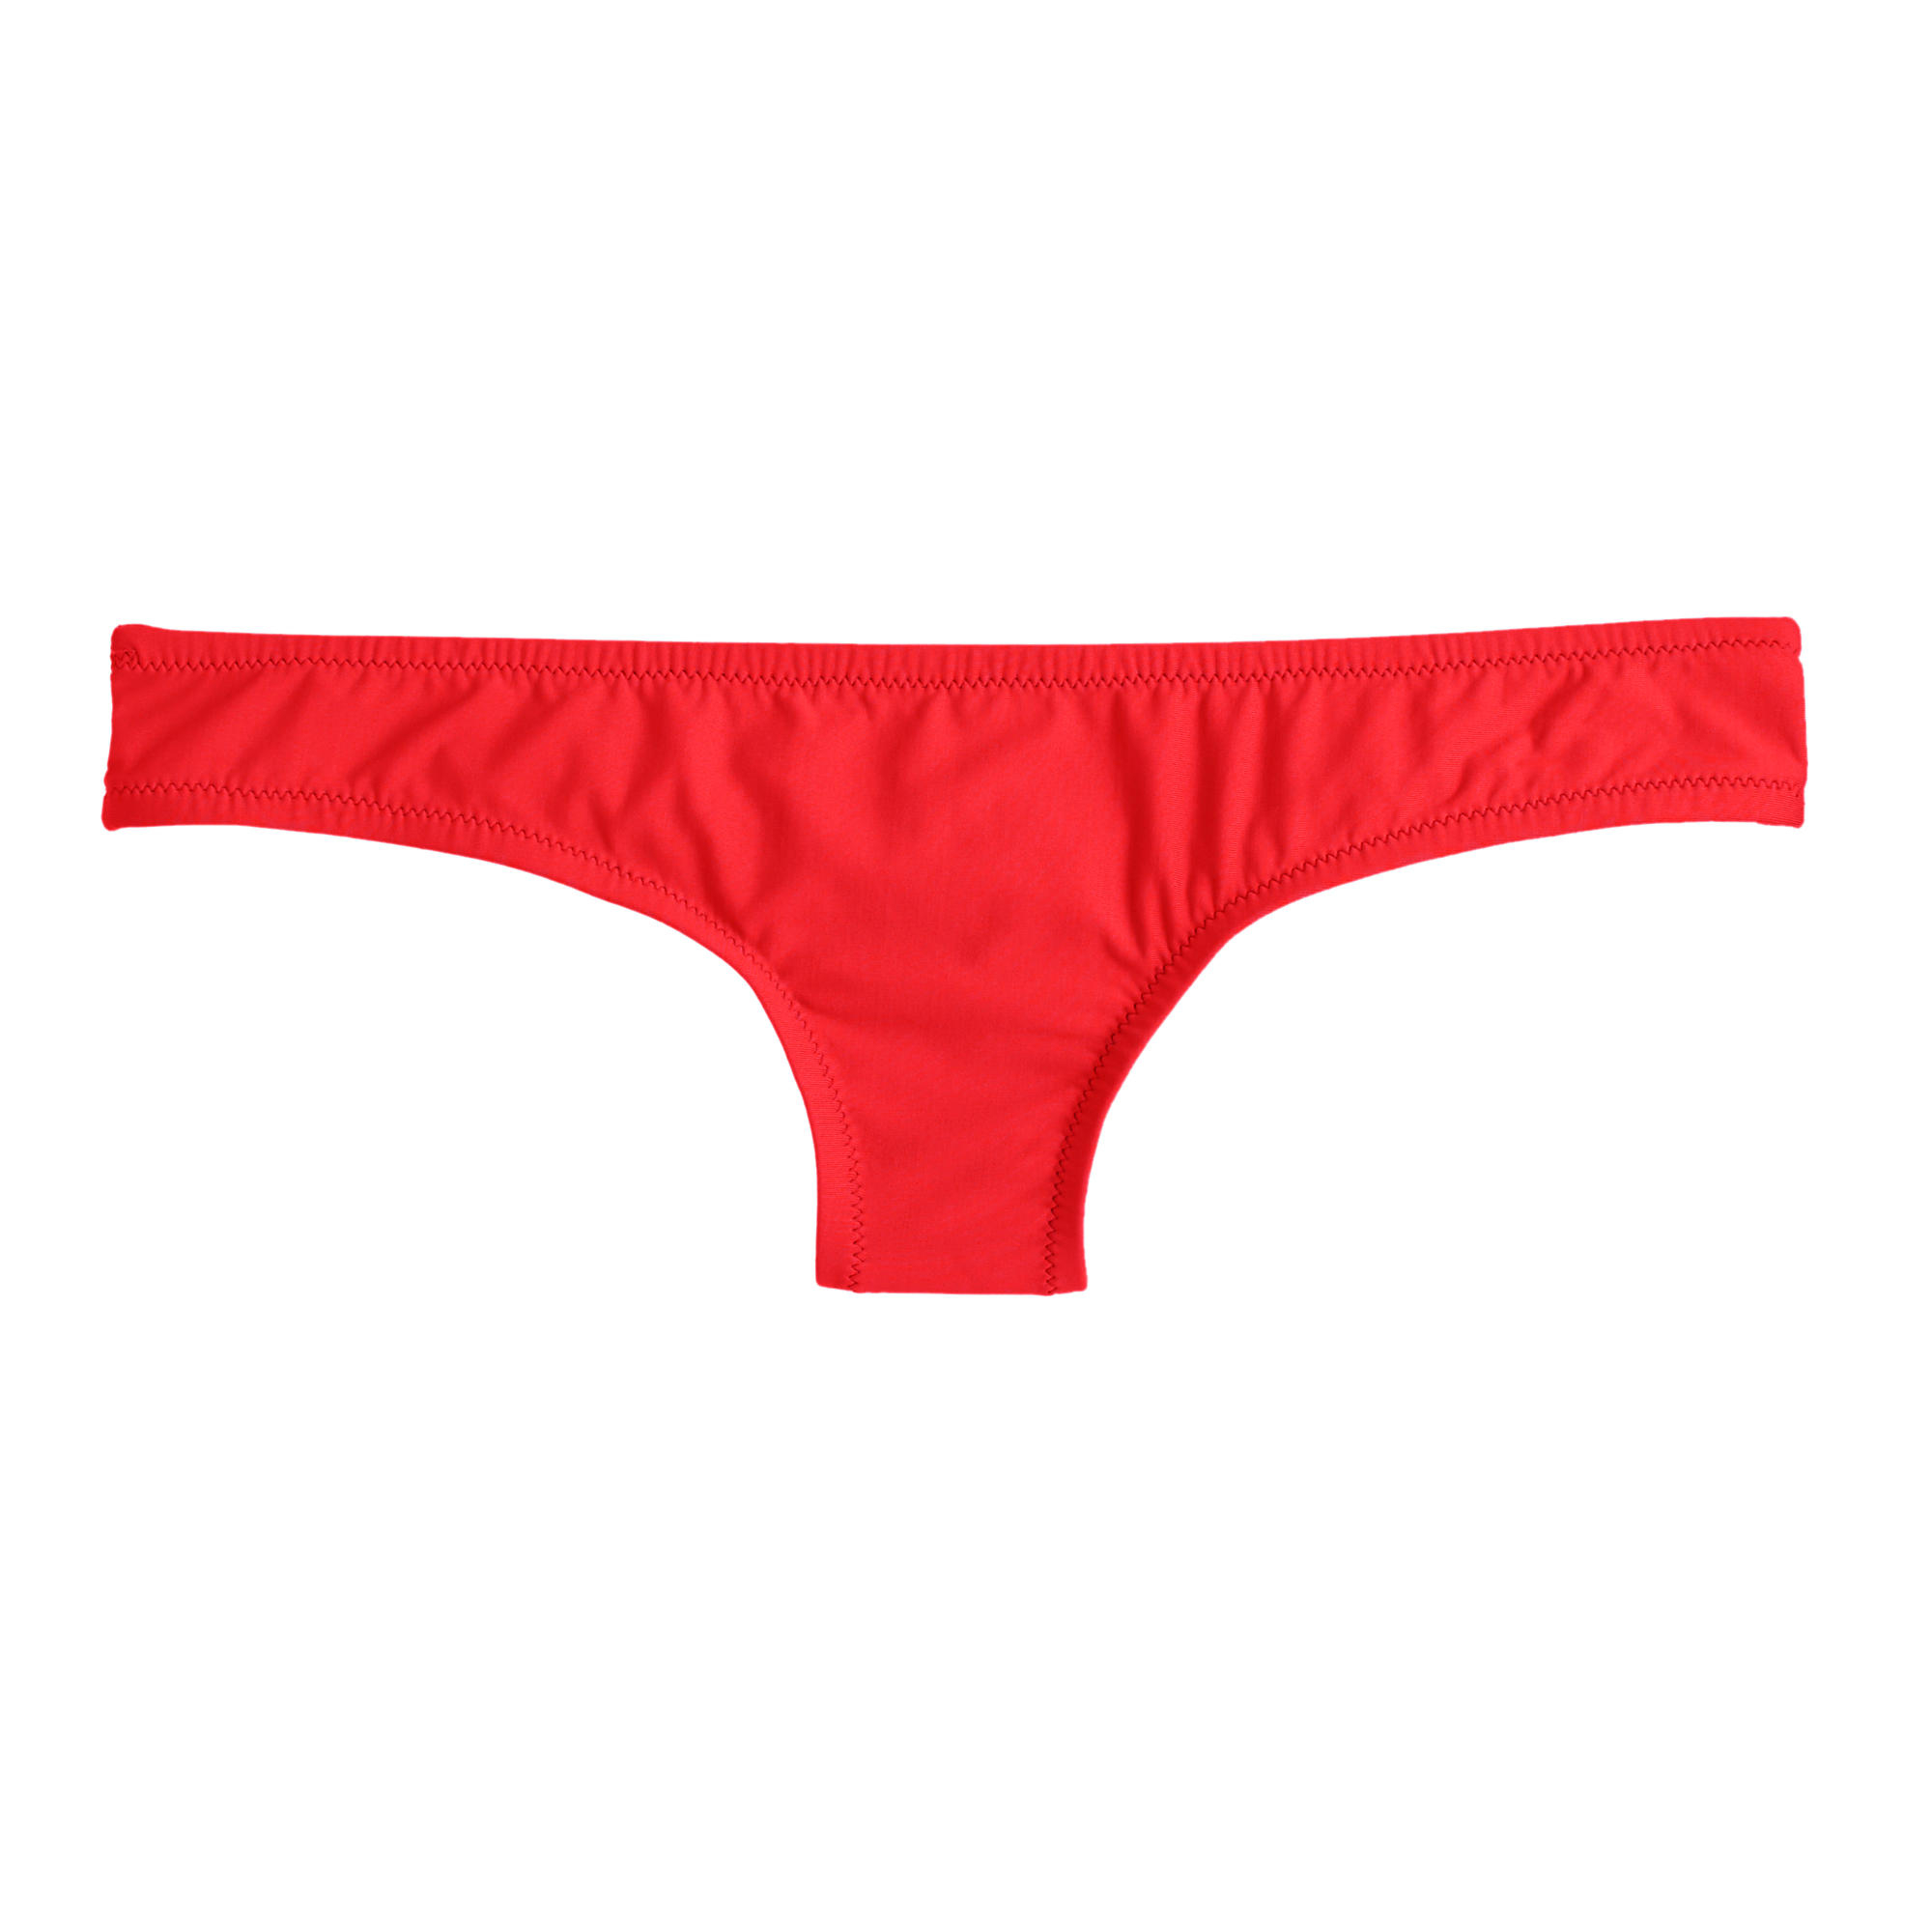 J.crew Surf Hipster Bikini Bottom in Red (belvedere red) | Lyst